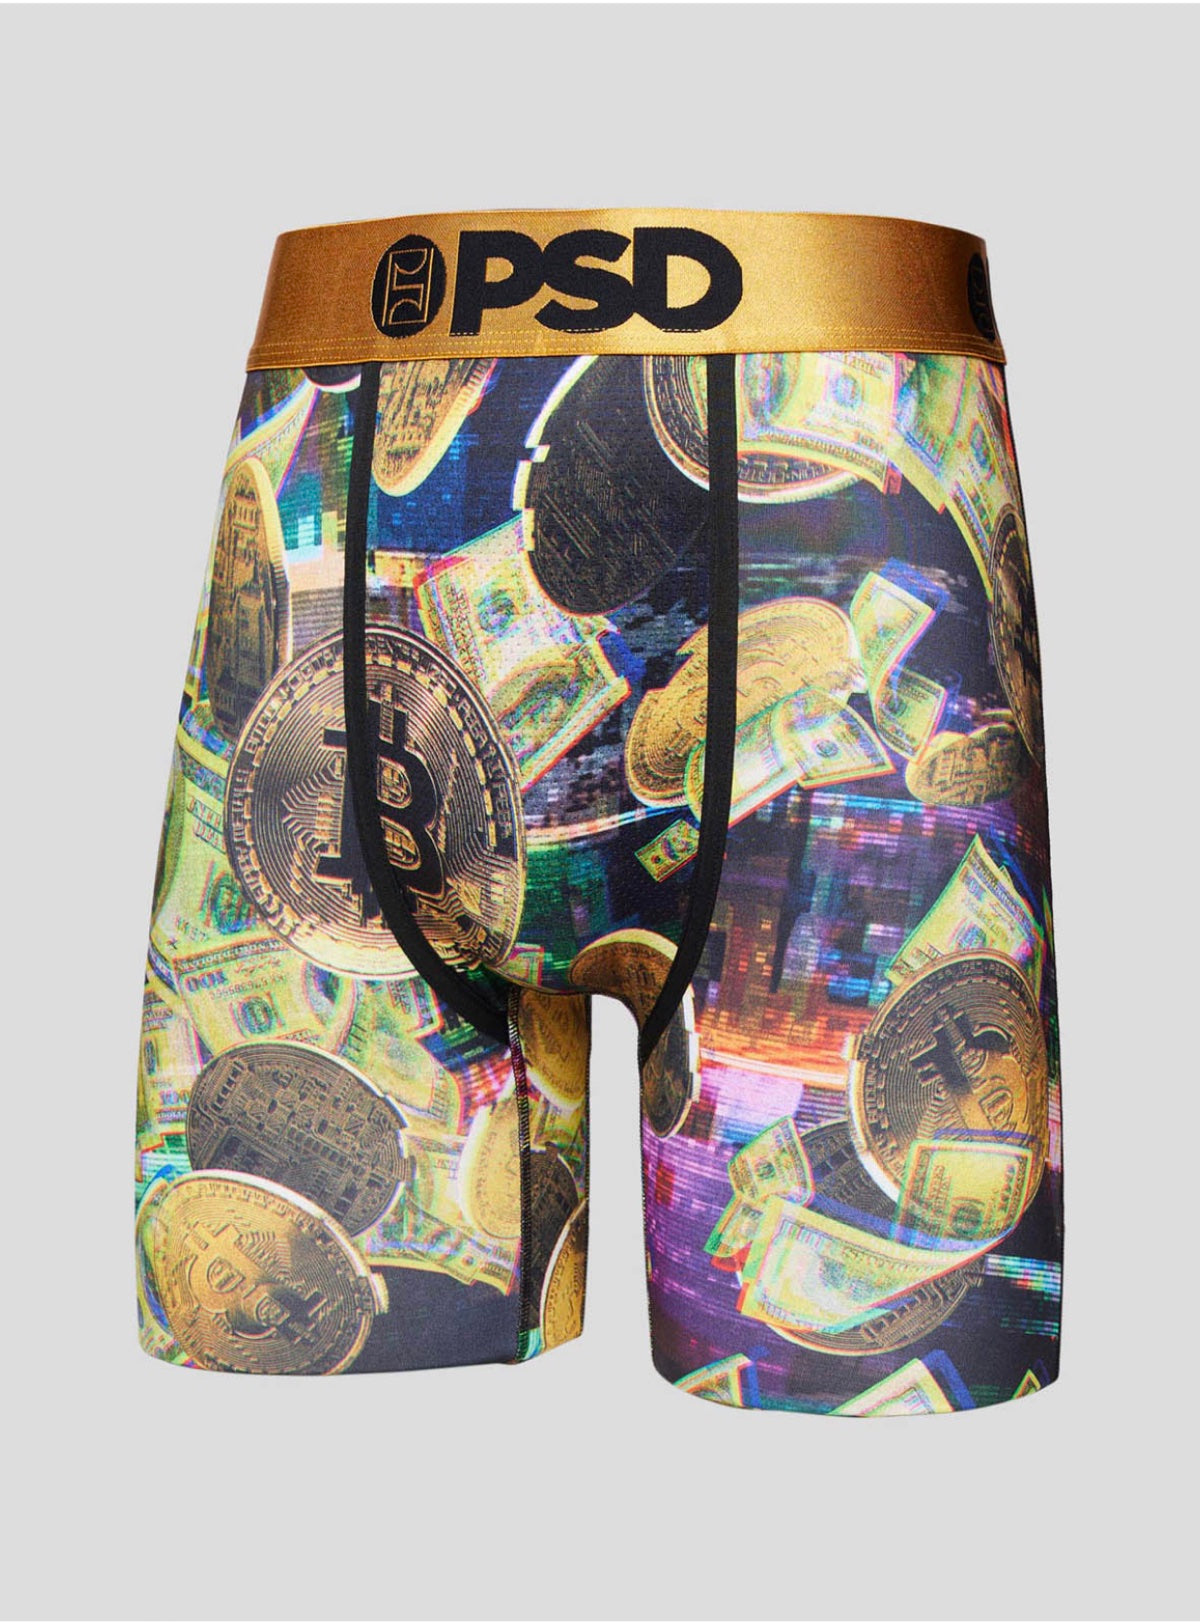 Bass Fish - PSD Underwear